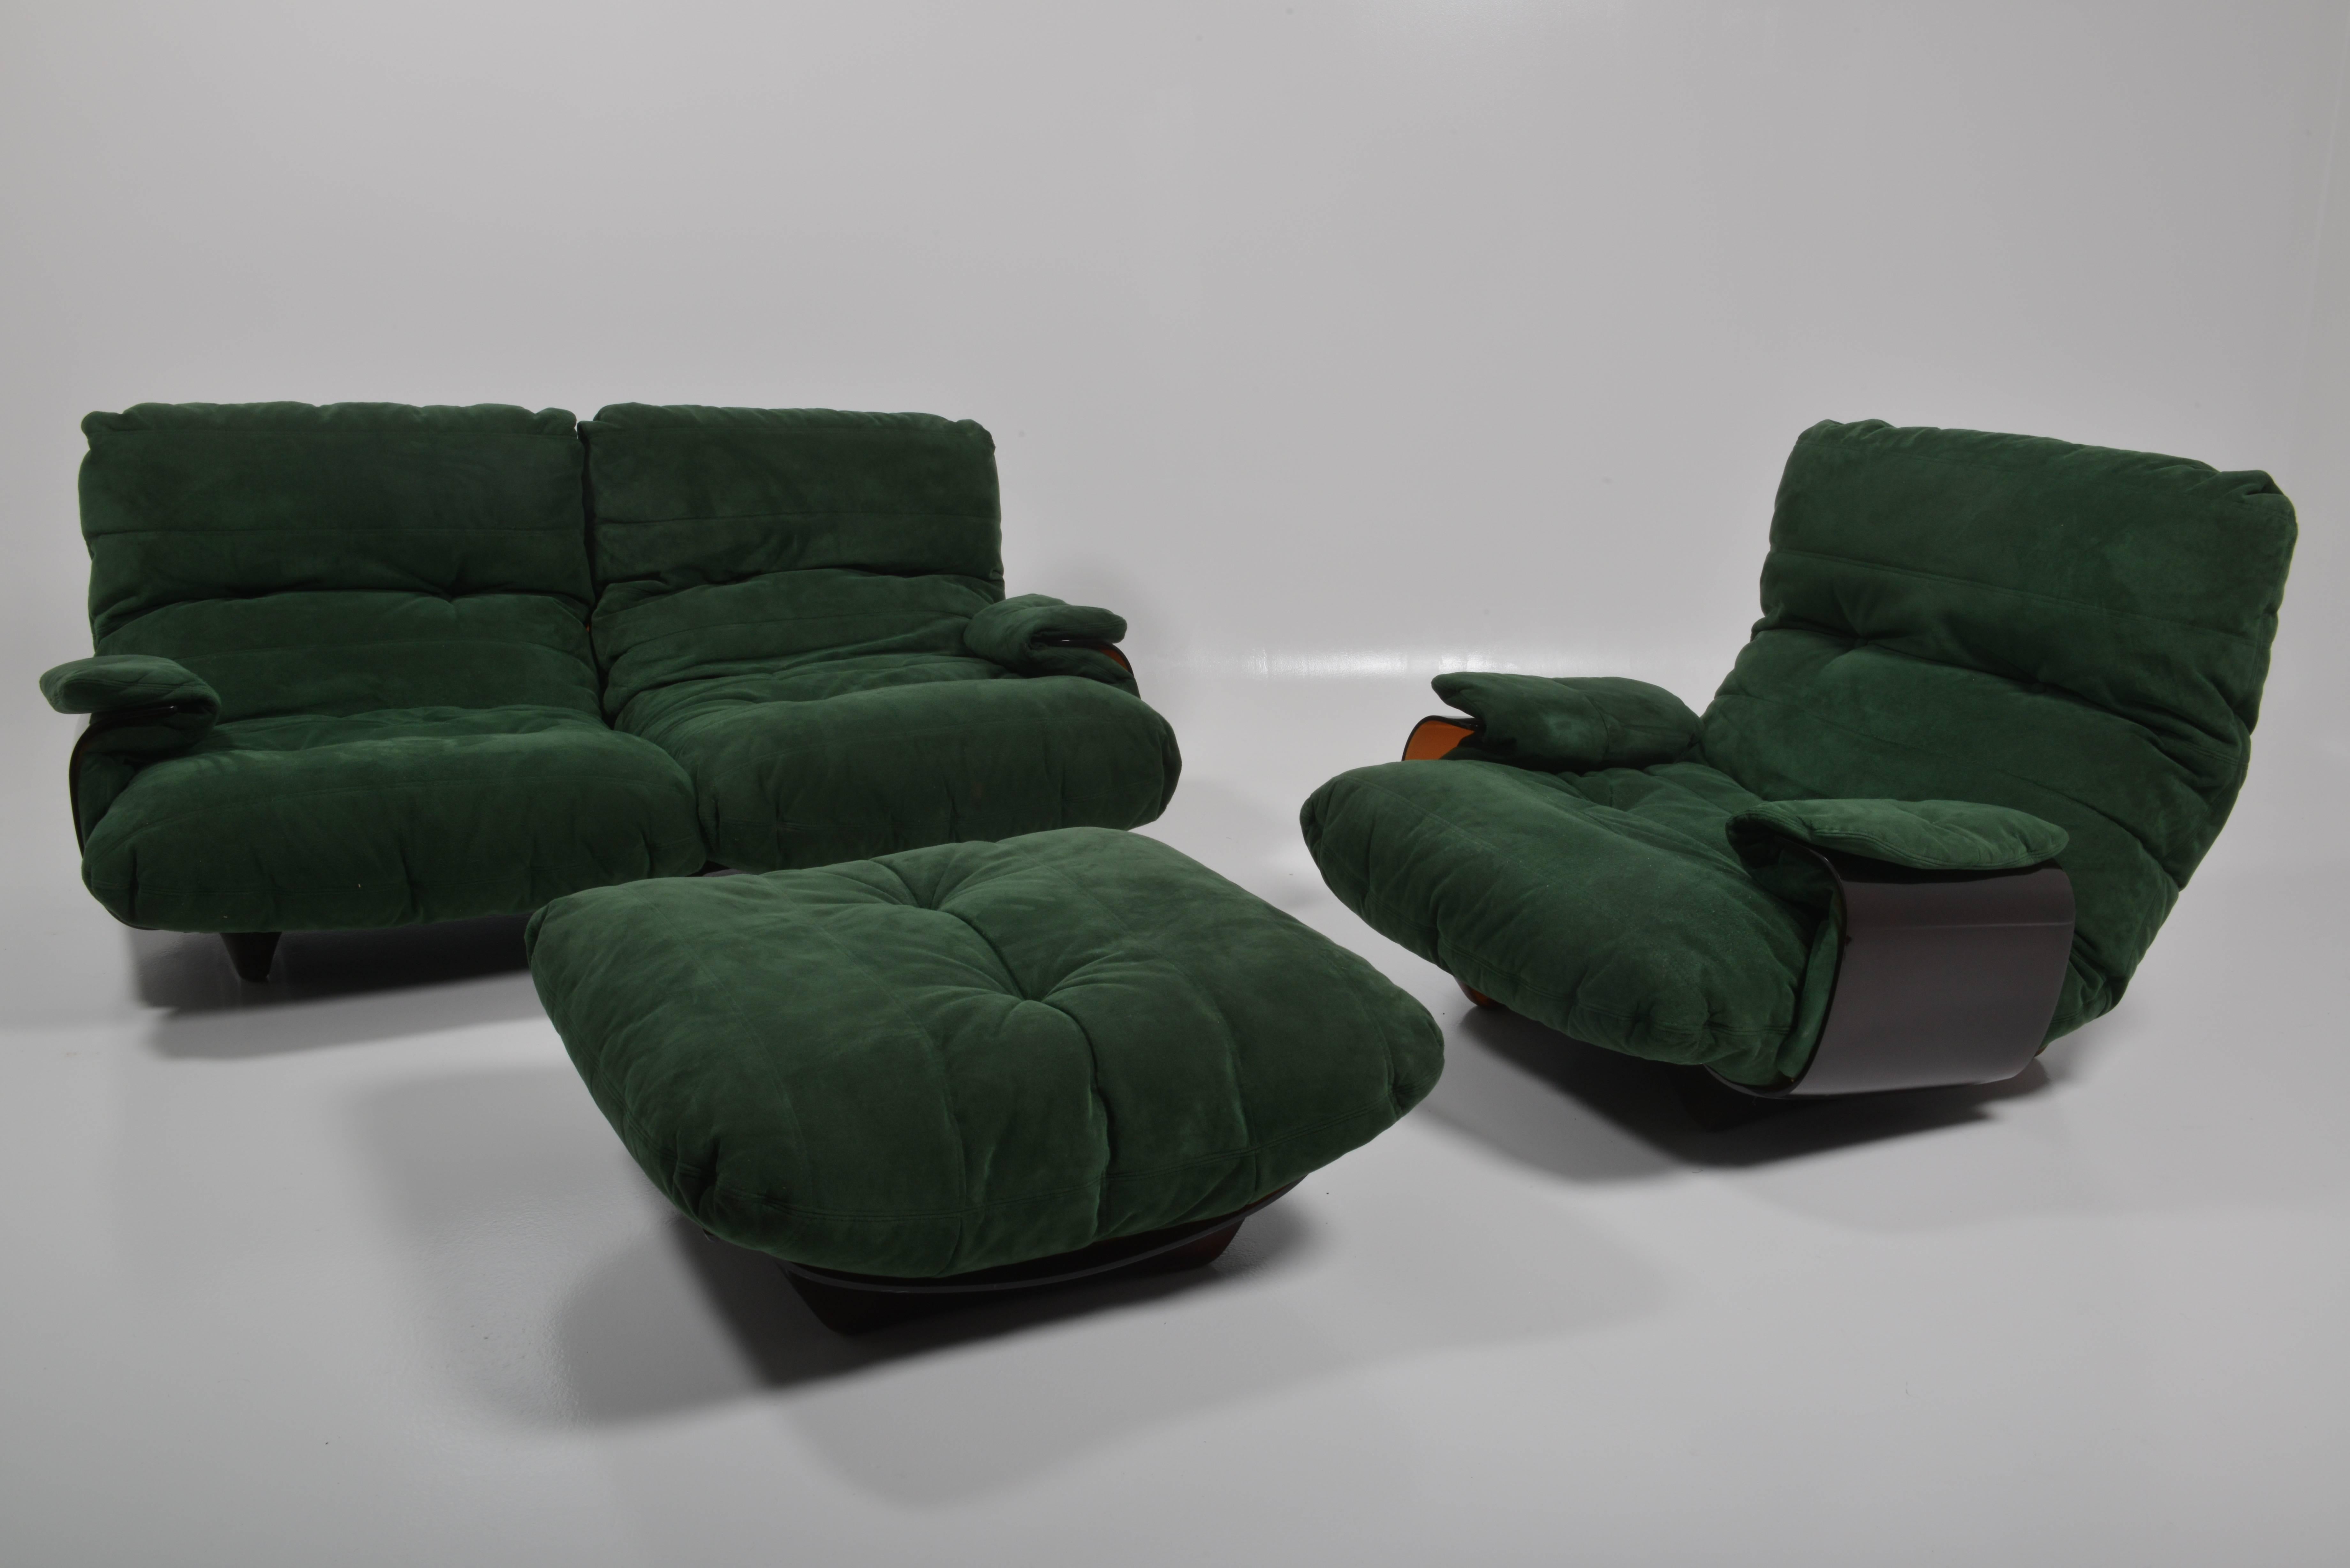 Green buckskin Marsala sofa by Ligne Roset, Michel Ducaroy, France, 1970s.